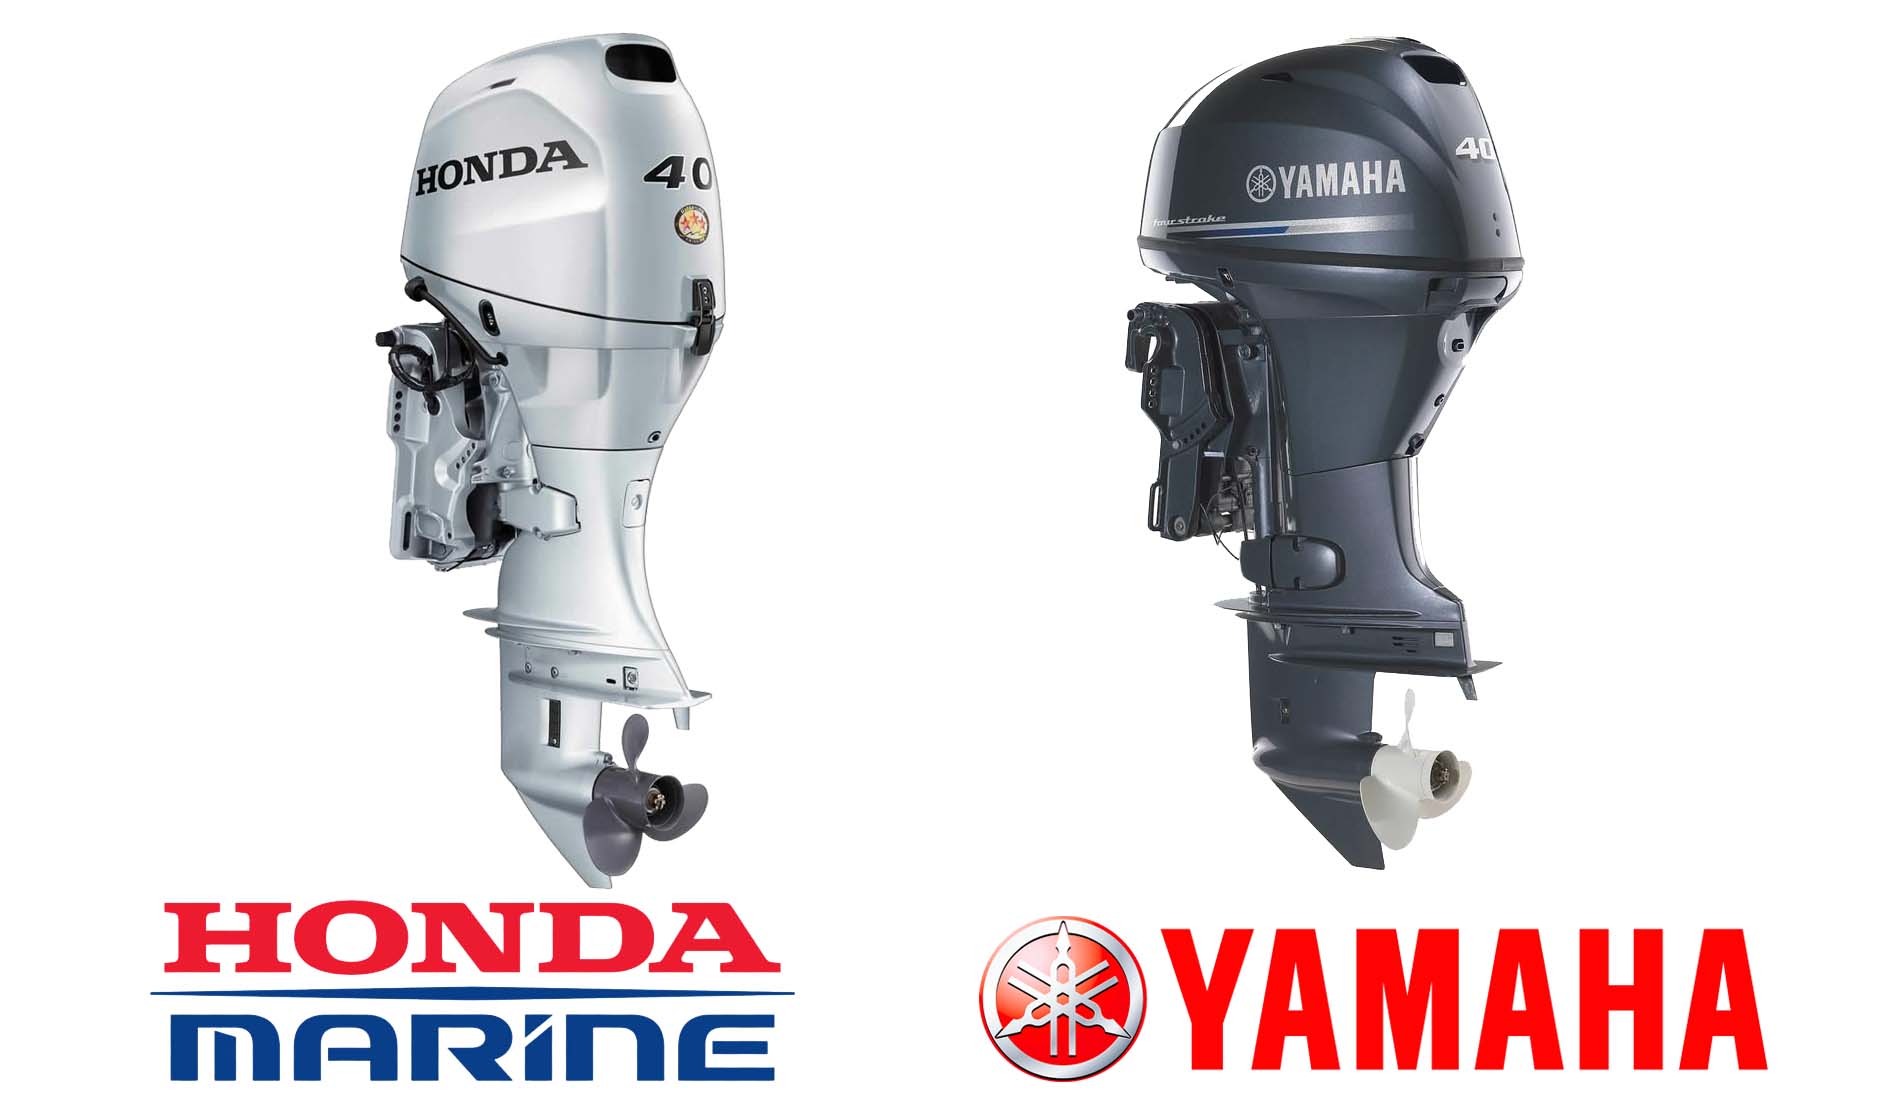 Yamaha 40 vs Honda 40 midrange outboards